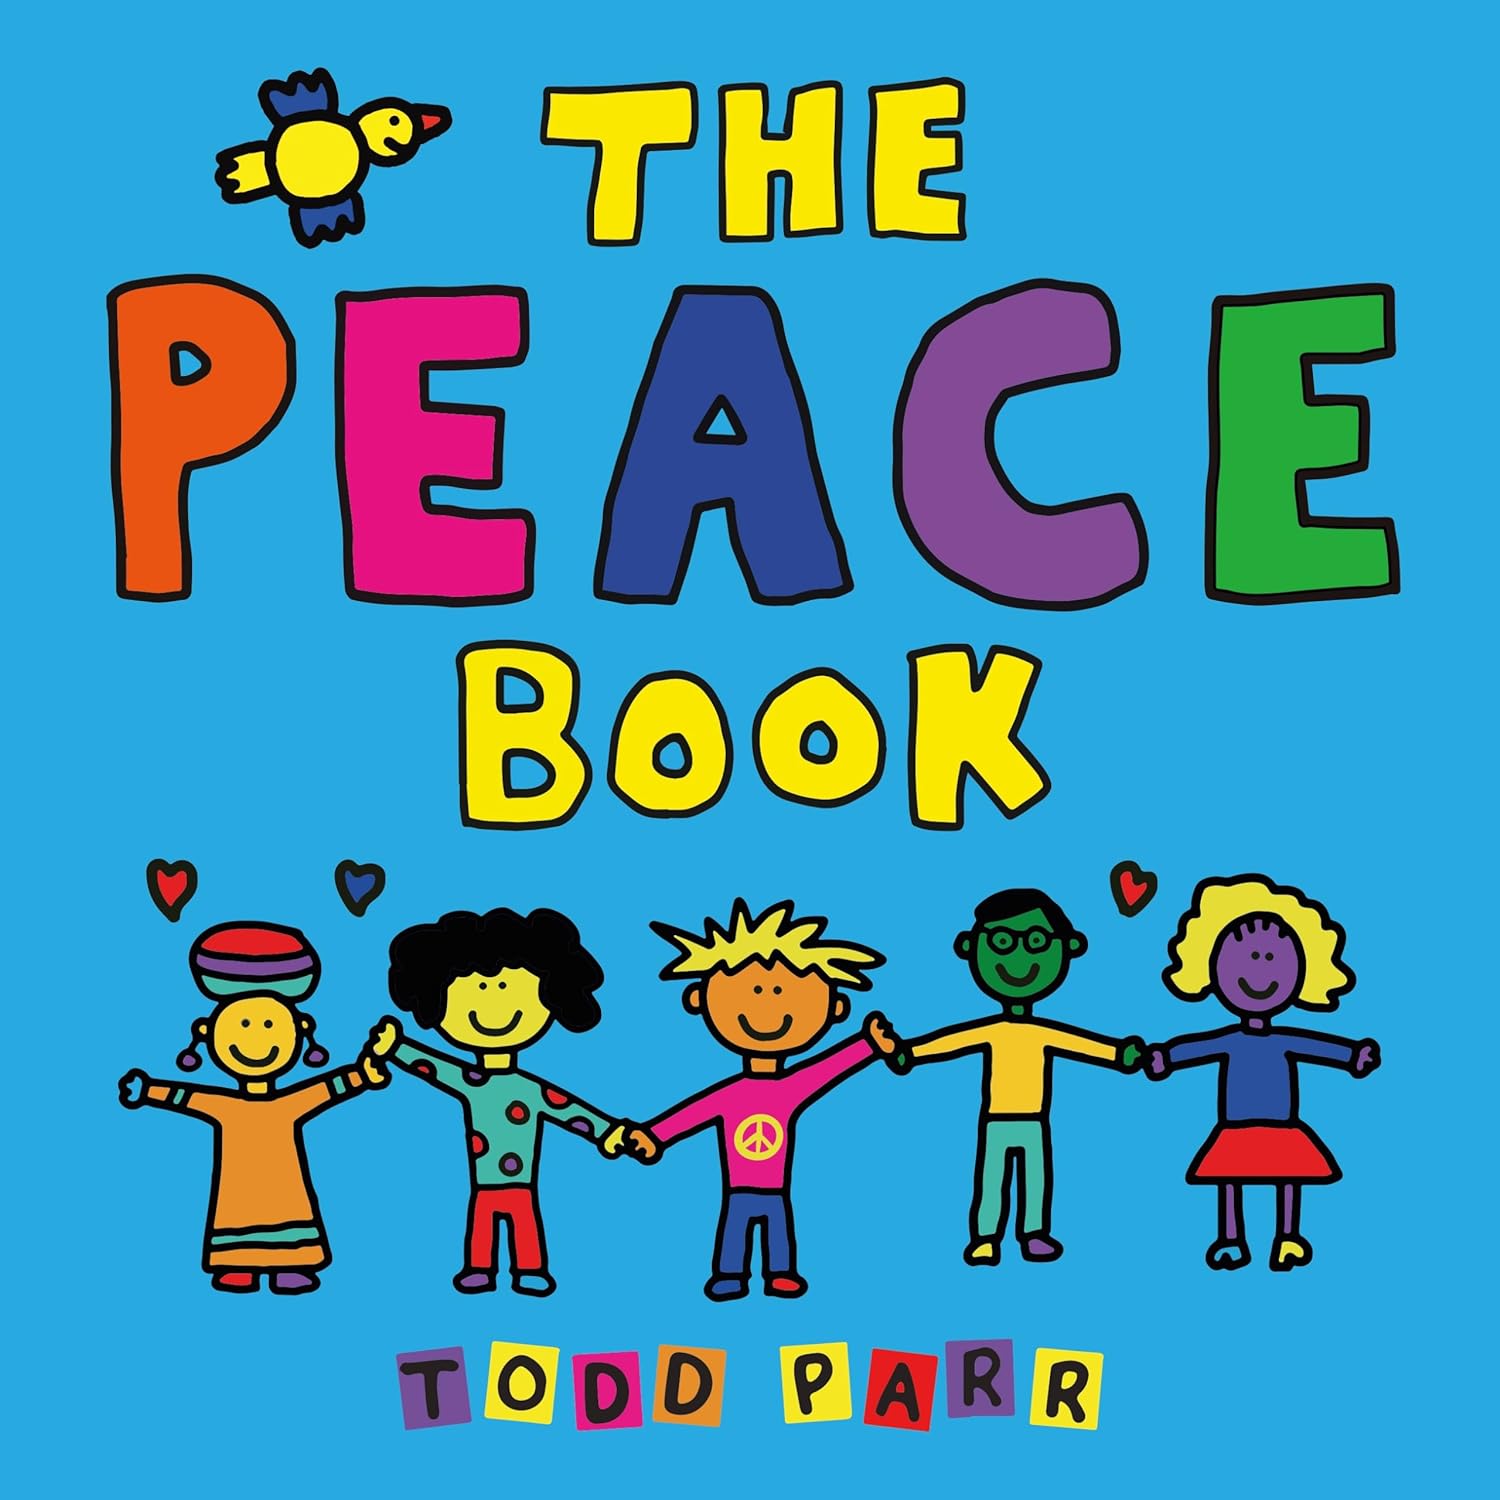 PEACE BOOK,THE